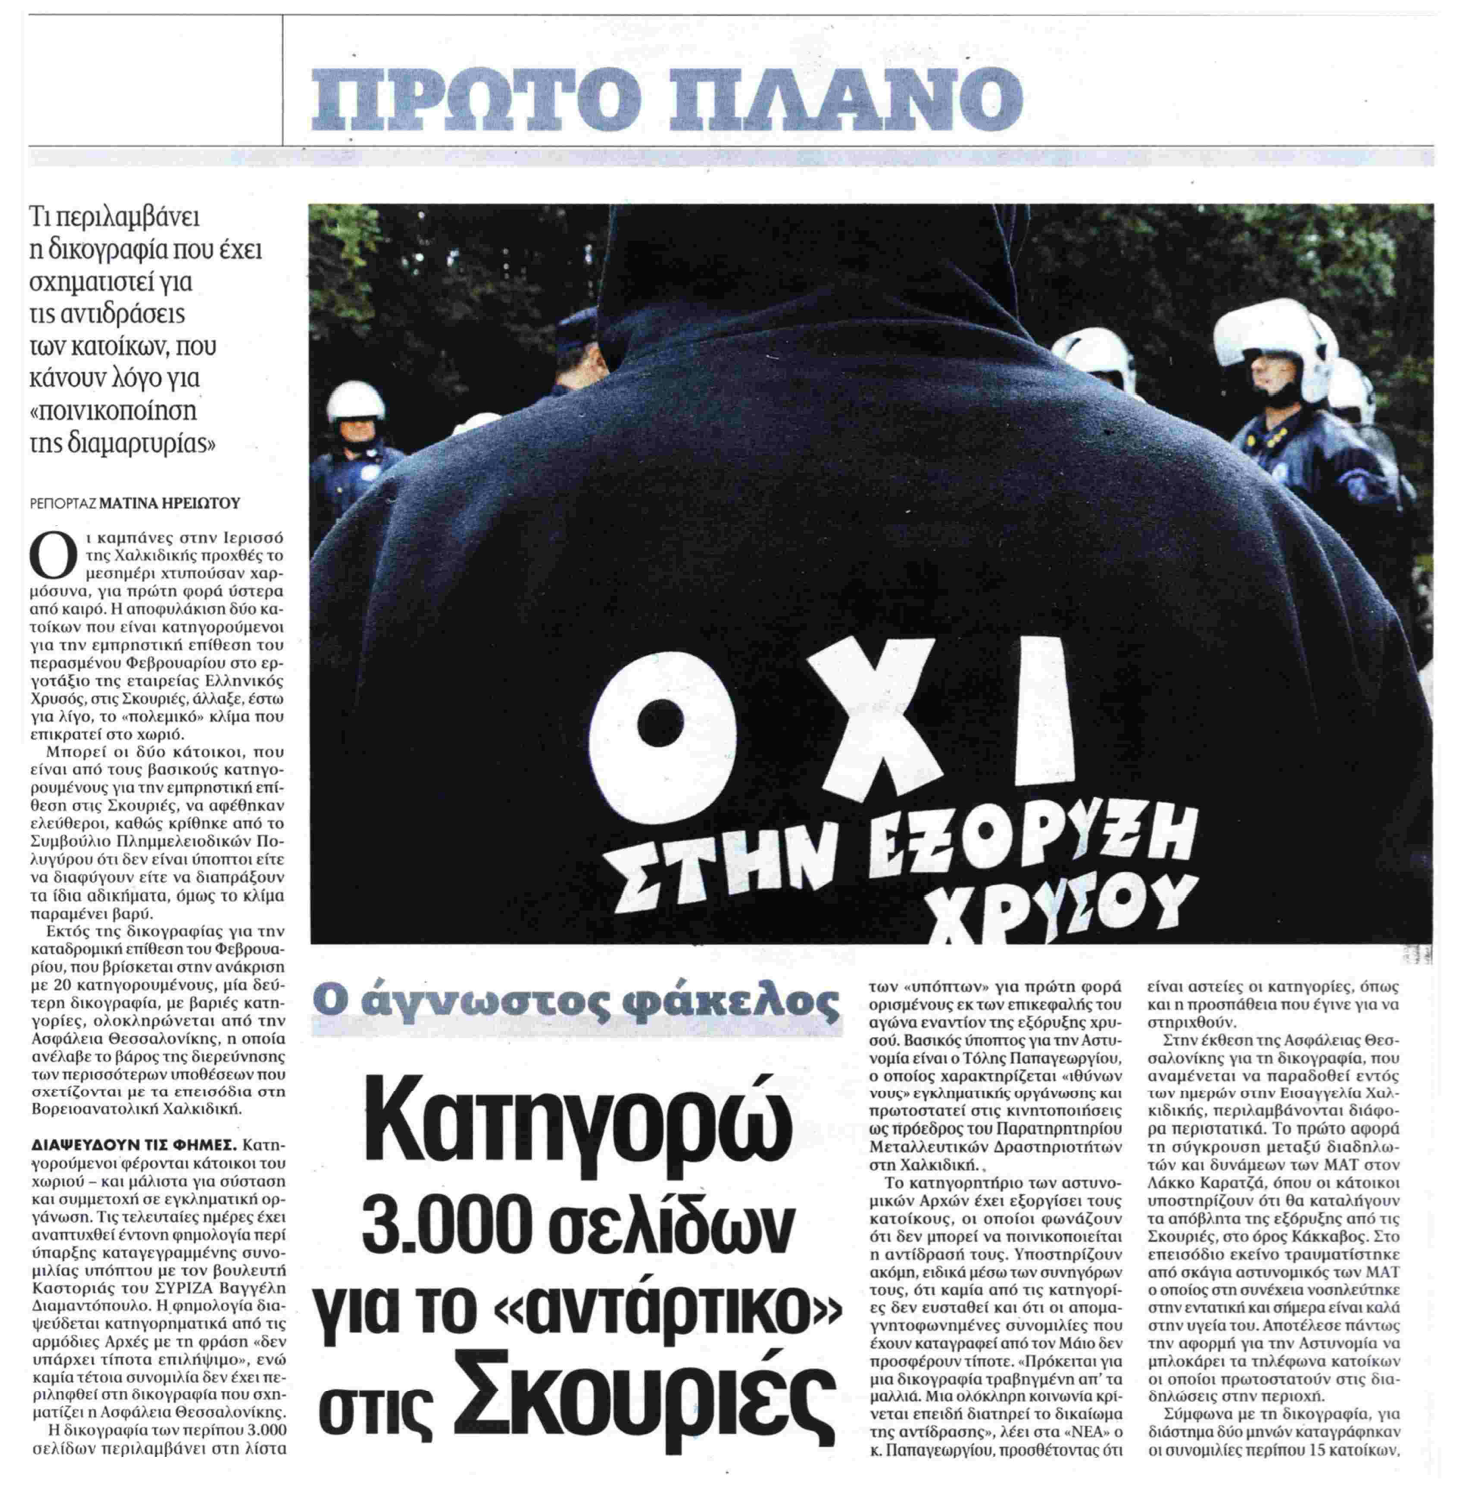 http://antigoldgreece.files.wordpress.com/2013/10/screenshot2013-10-16at12-58-47pm.png